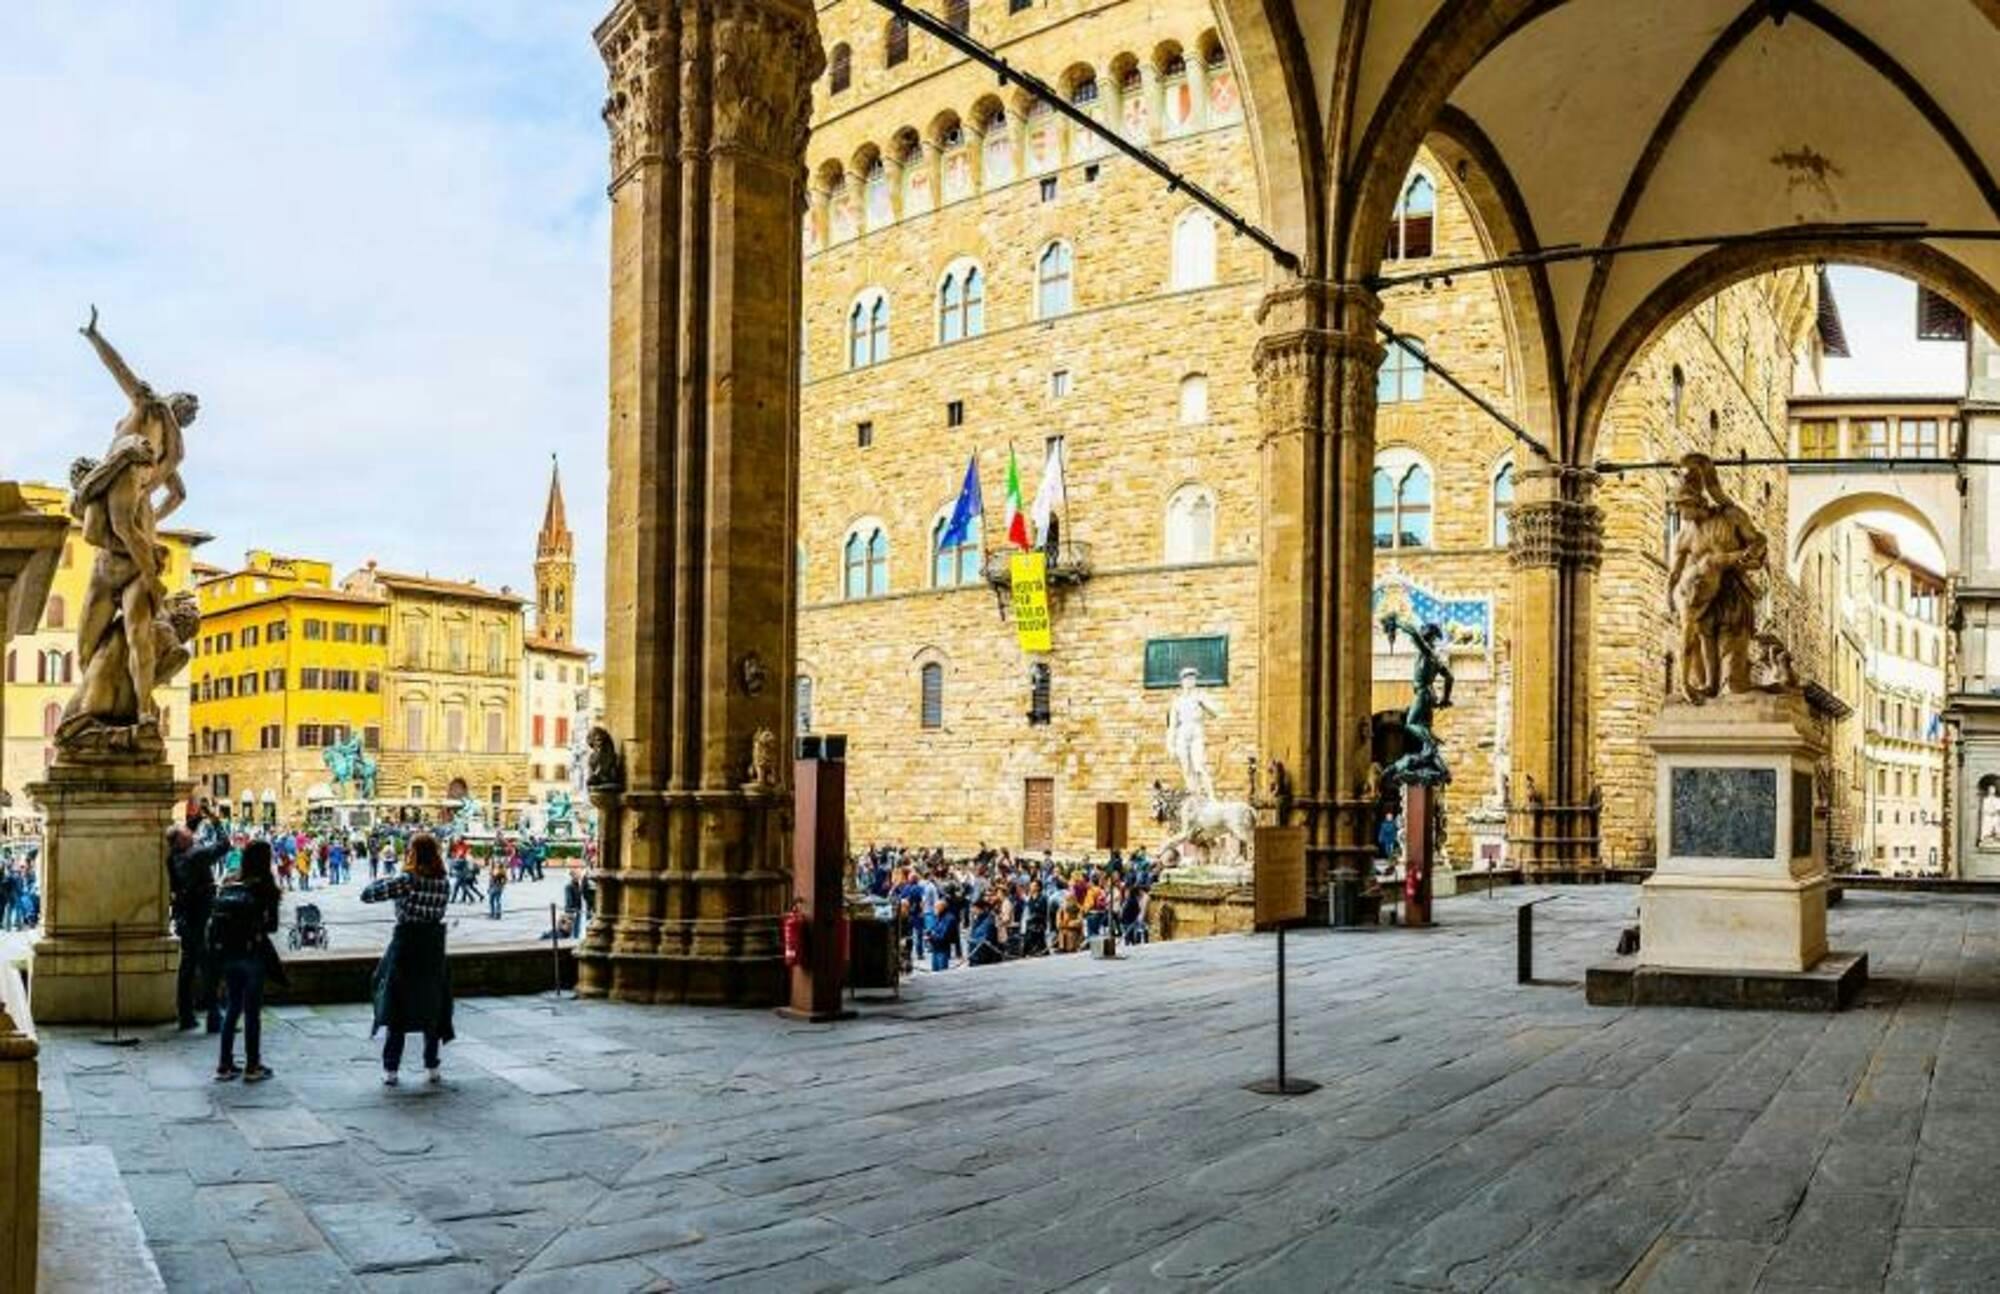 Explore Palazzo Vecchio and its Tower